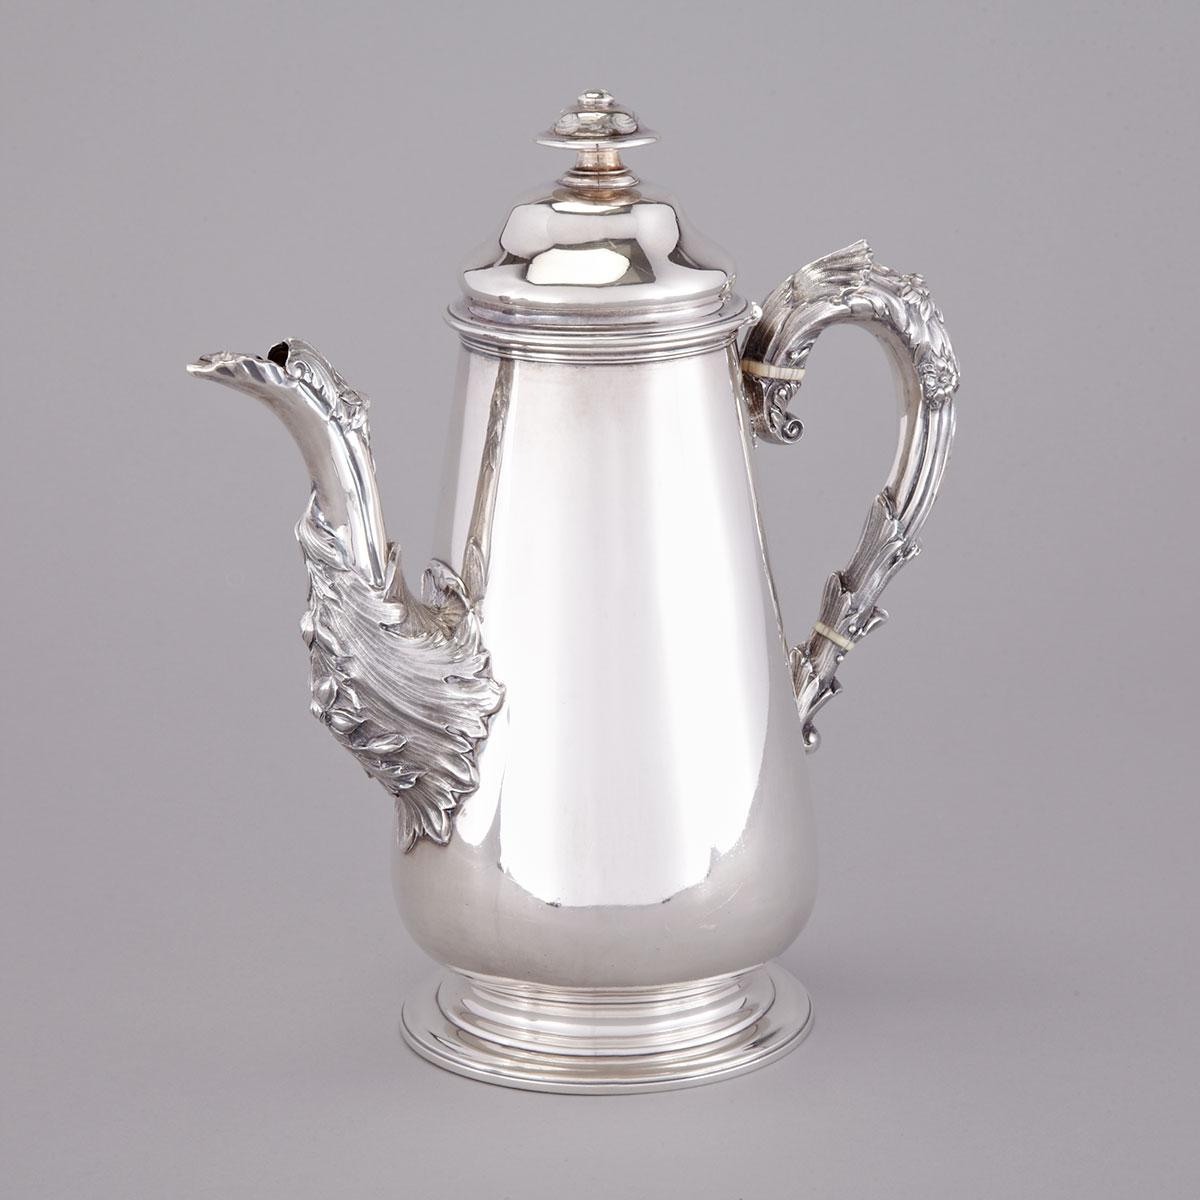 William IV Silver Coffee Pot, Charles Fox, London, 1834